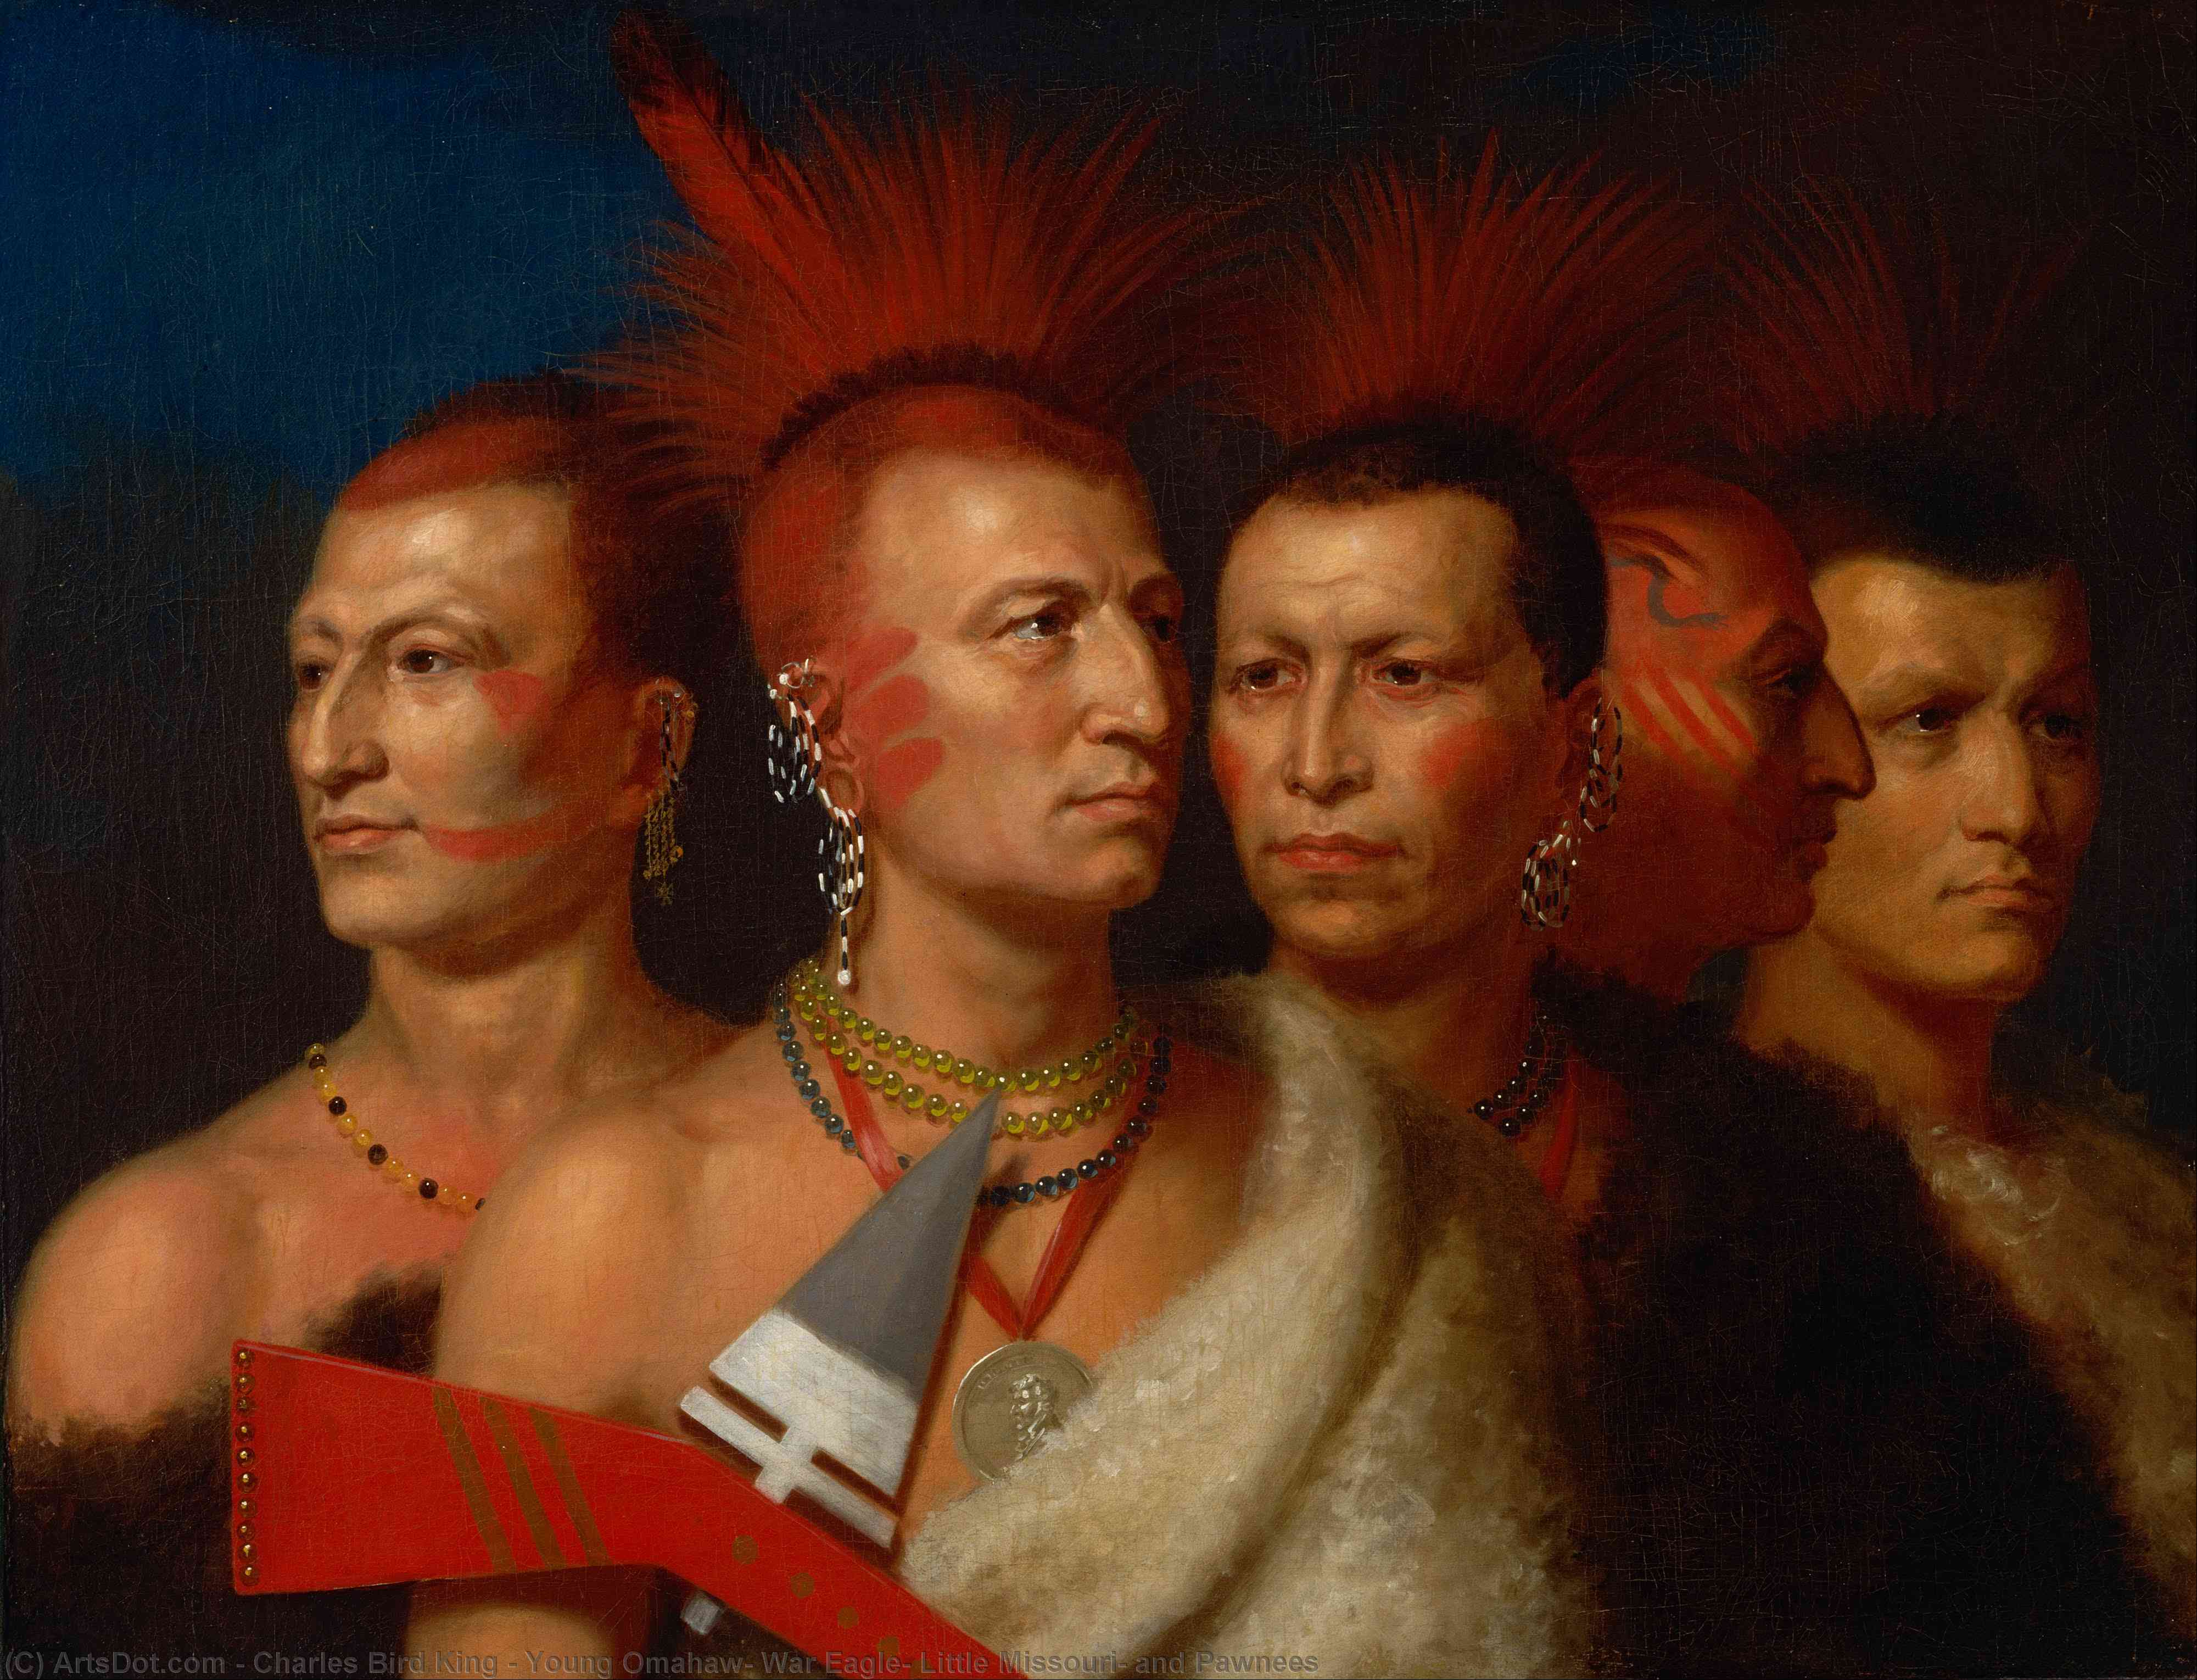 Acheter Reproductions D'art De Musée Young Omahaw, War Eagle, Little Missouri et Pawnees, 1821 de Charles Bird King (1785-1862, United States) | ArtsDot.com